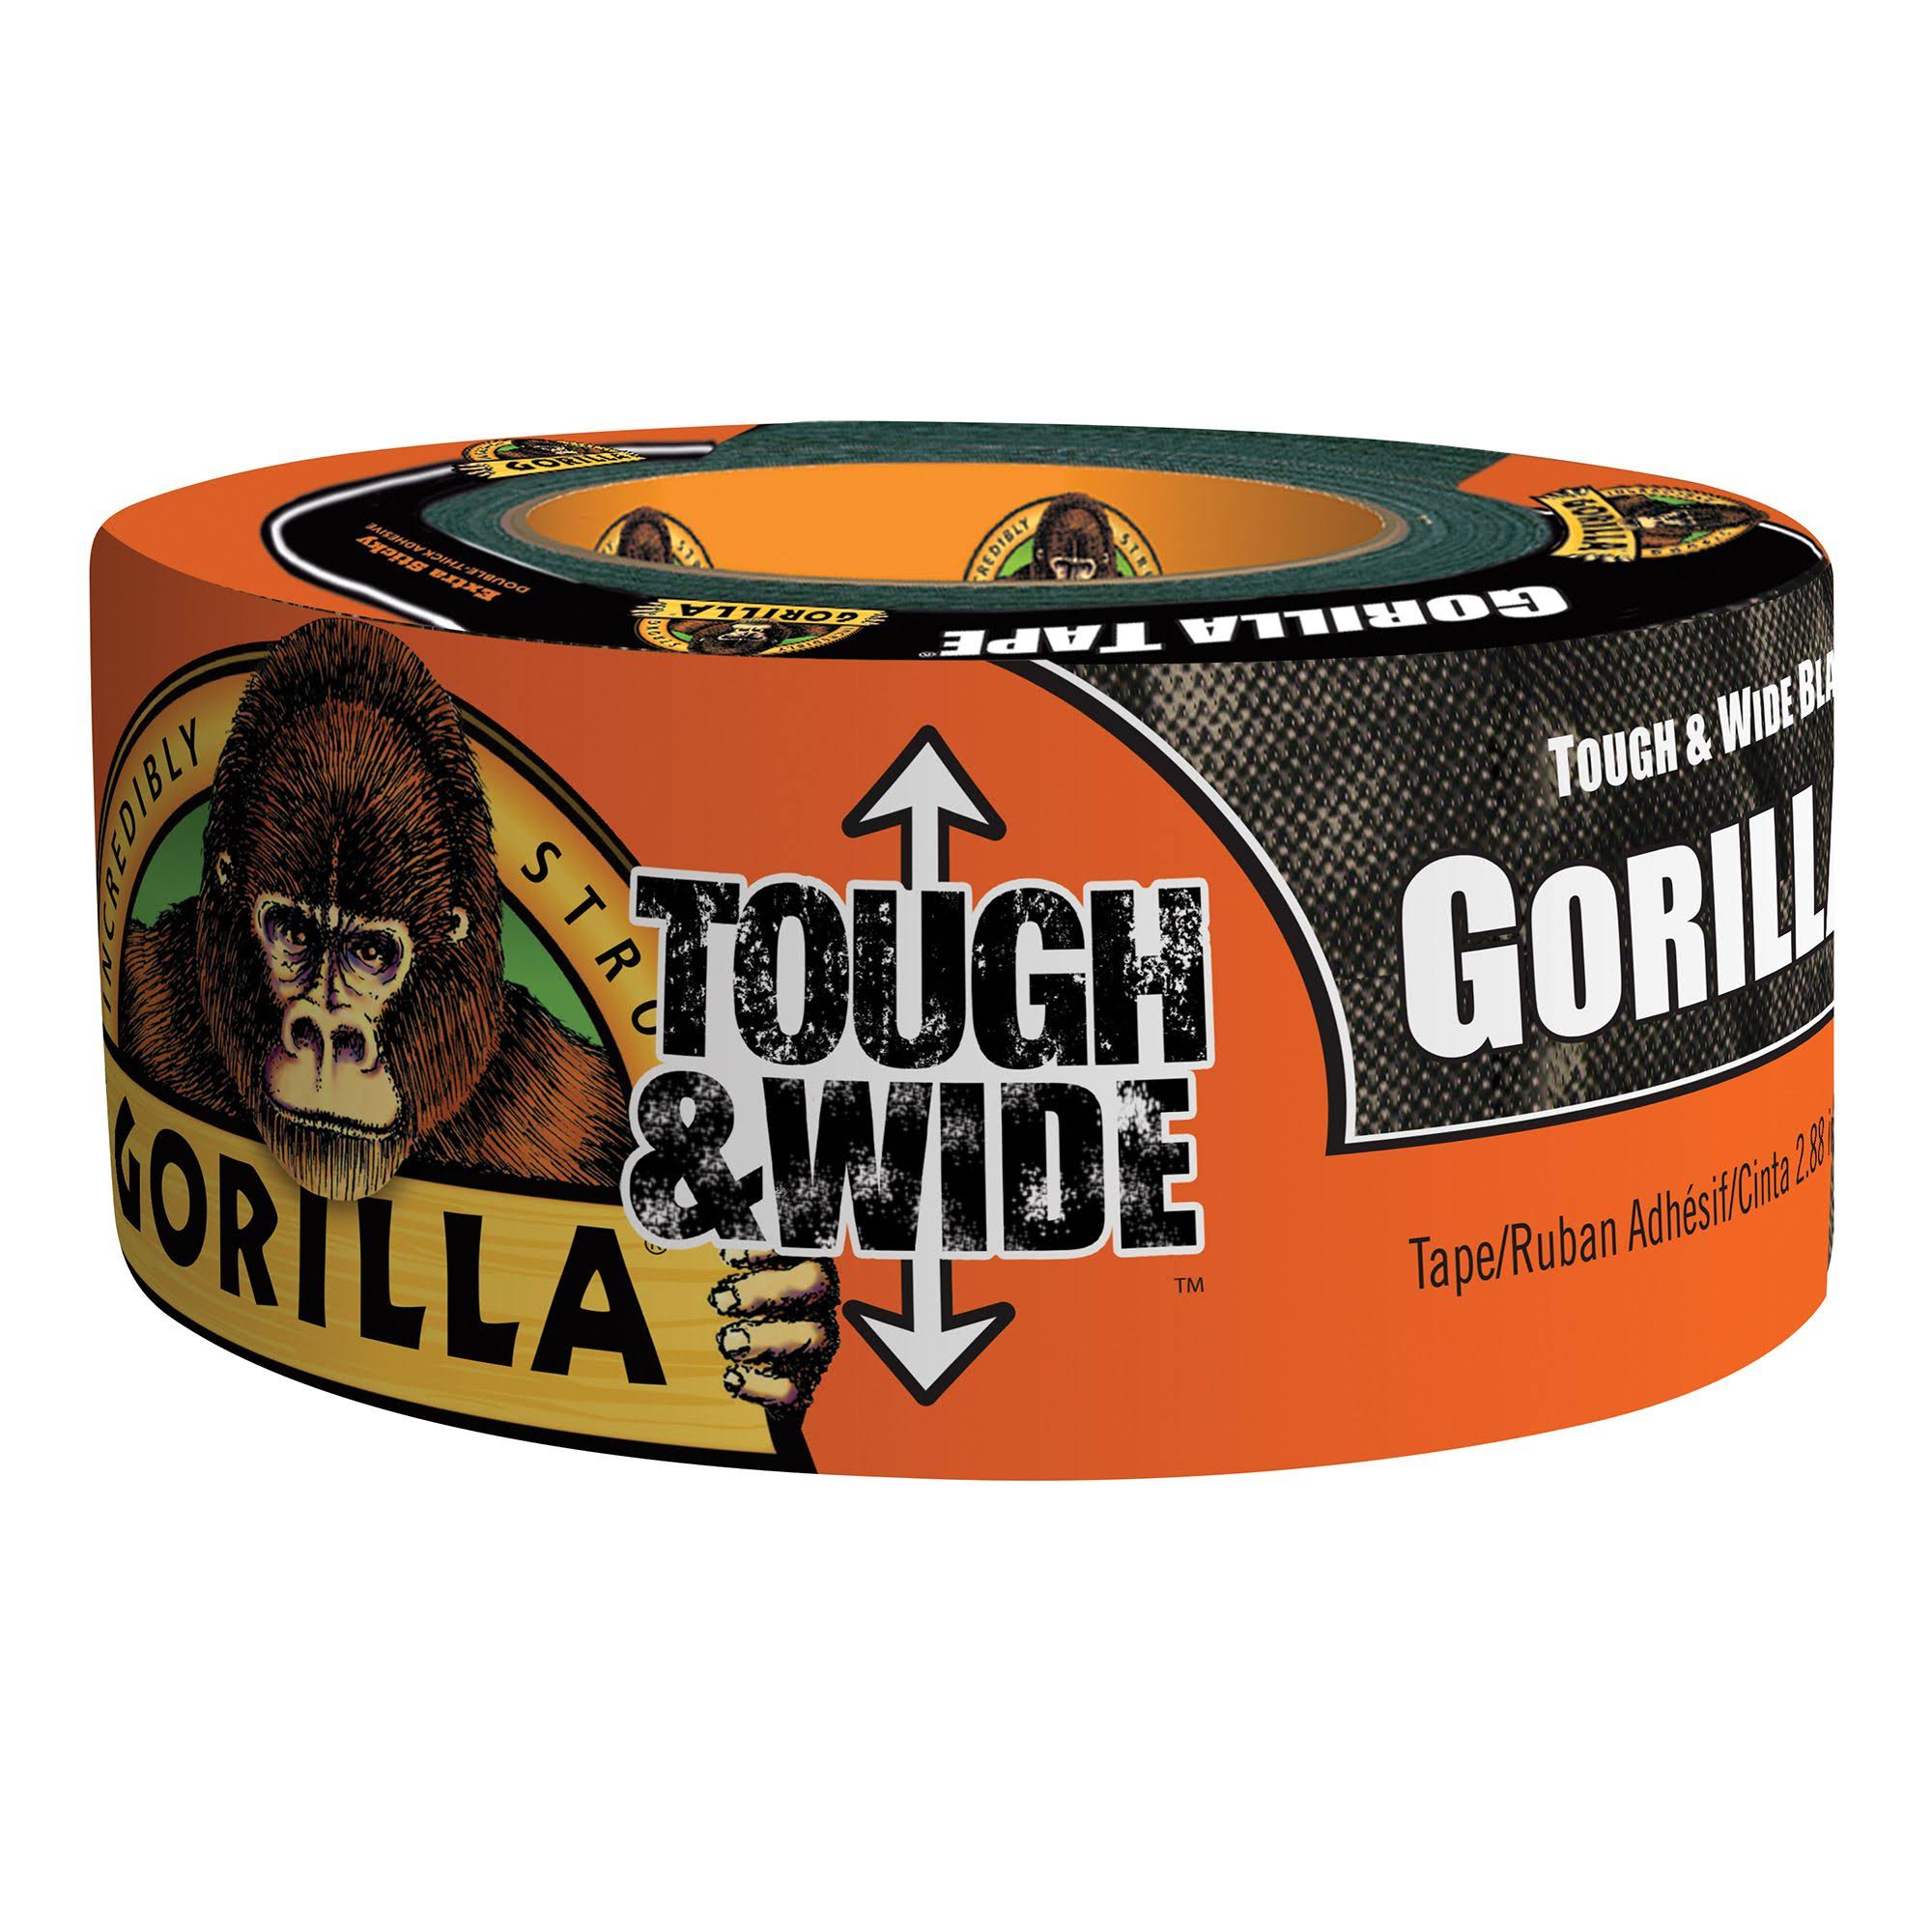 Gorilla Tough And Wide Tape - 73mm x 27m